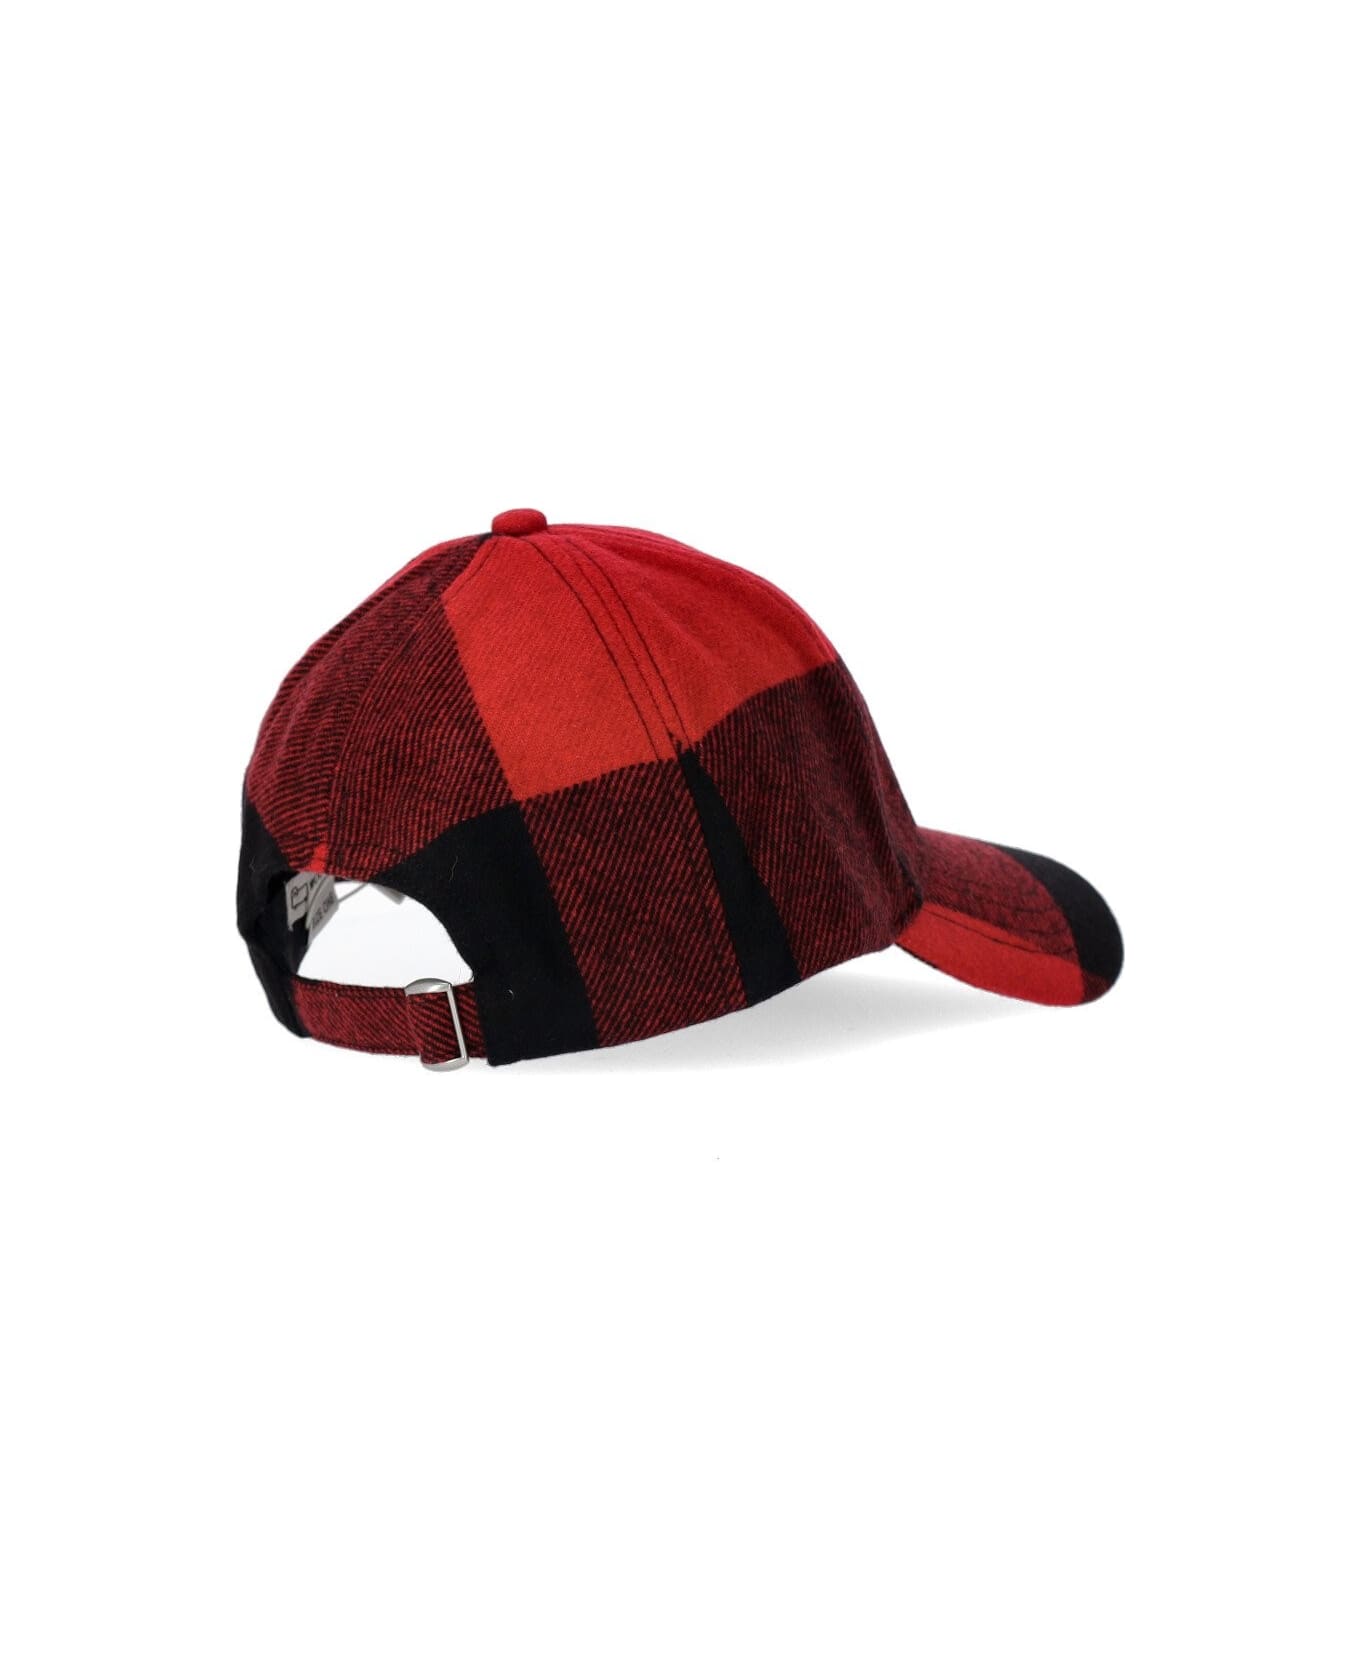 Woolrich Red Black Check Baseball Cap - Mens Chubbies Nylon Cord Snapback Hat